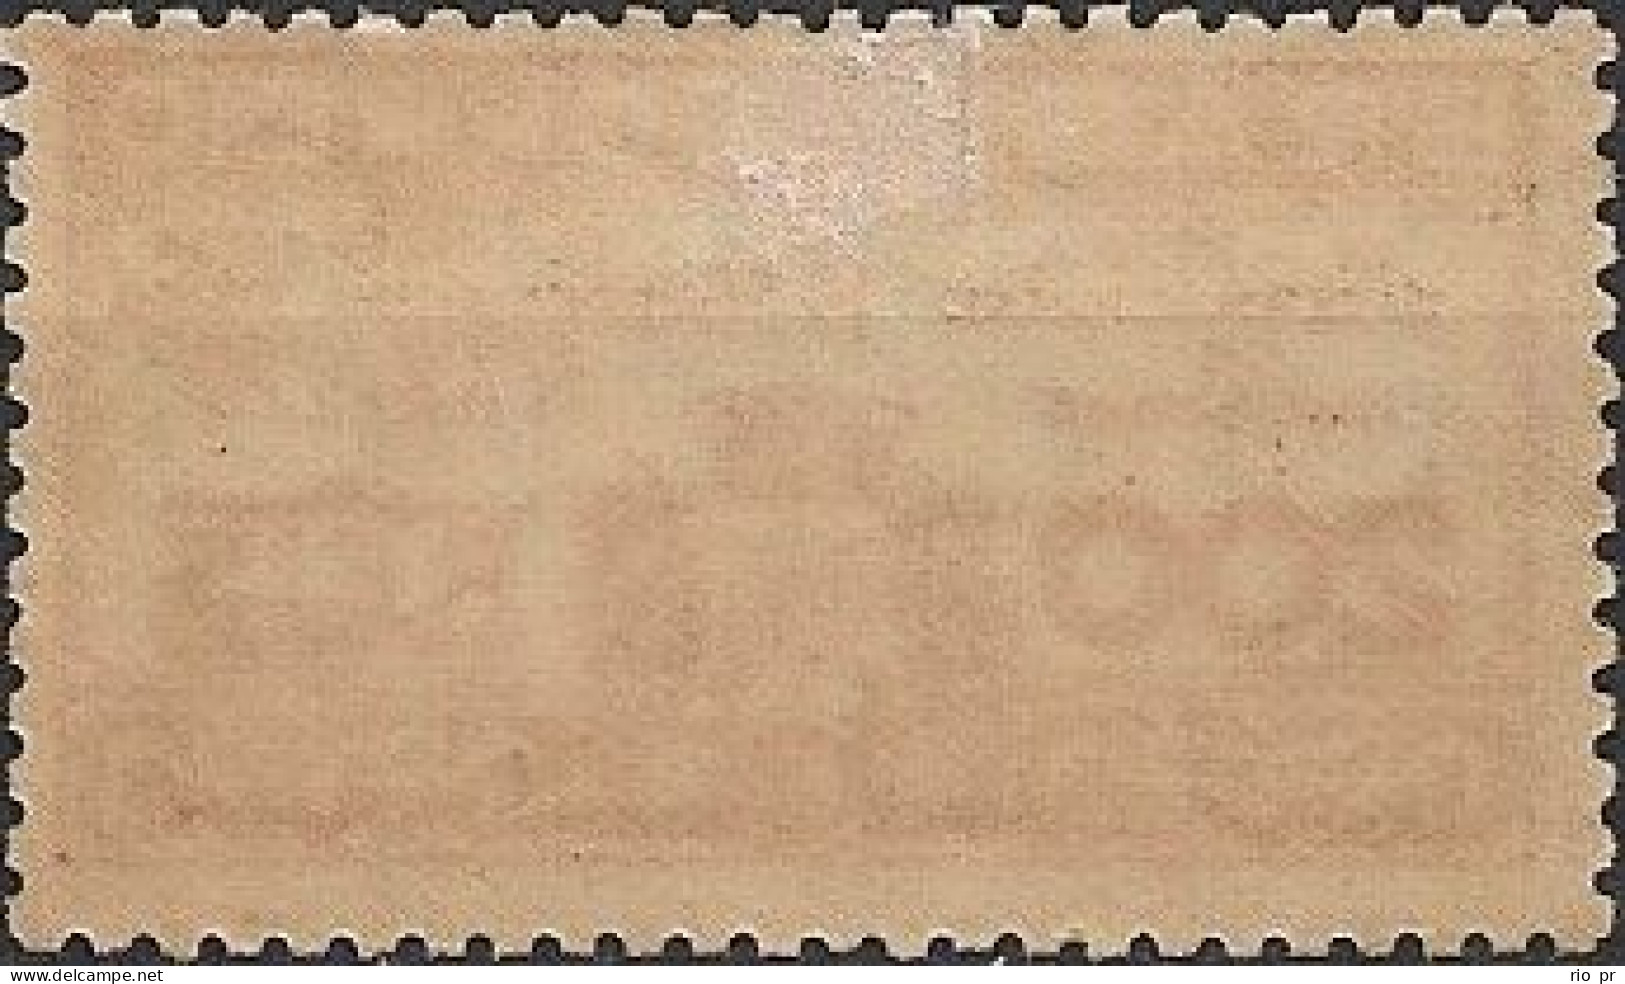 BRAZIL - 9th INTERNATIONAL SAMPLE FAIR, RIO DE JANEIRO 1936 - MH - Unused Stamps